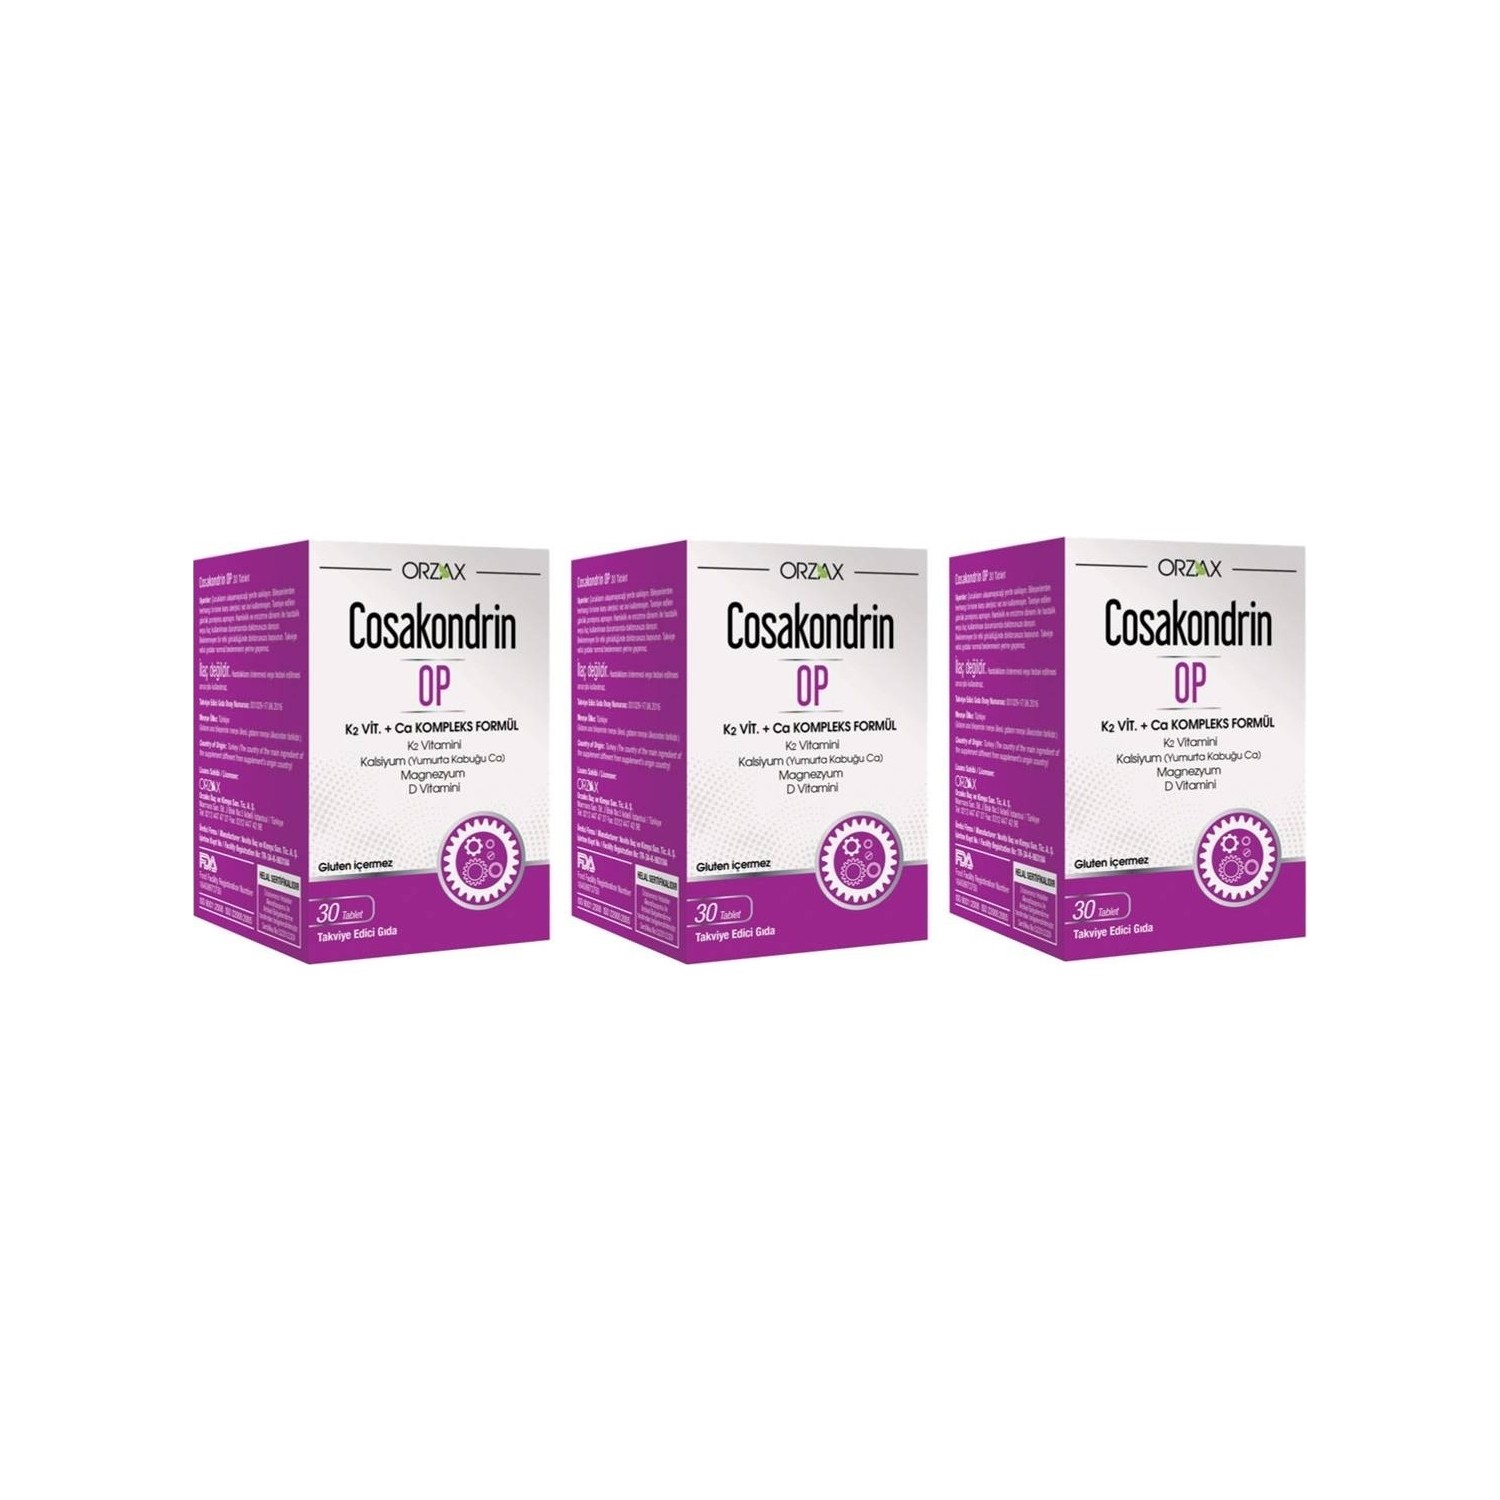 Пищевая добавка Orzax Cosakondrin Op, 3 упаковки по 30 таблеток box box box box box box box box box box box box box